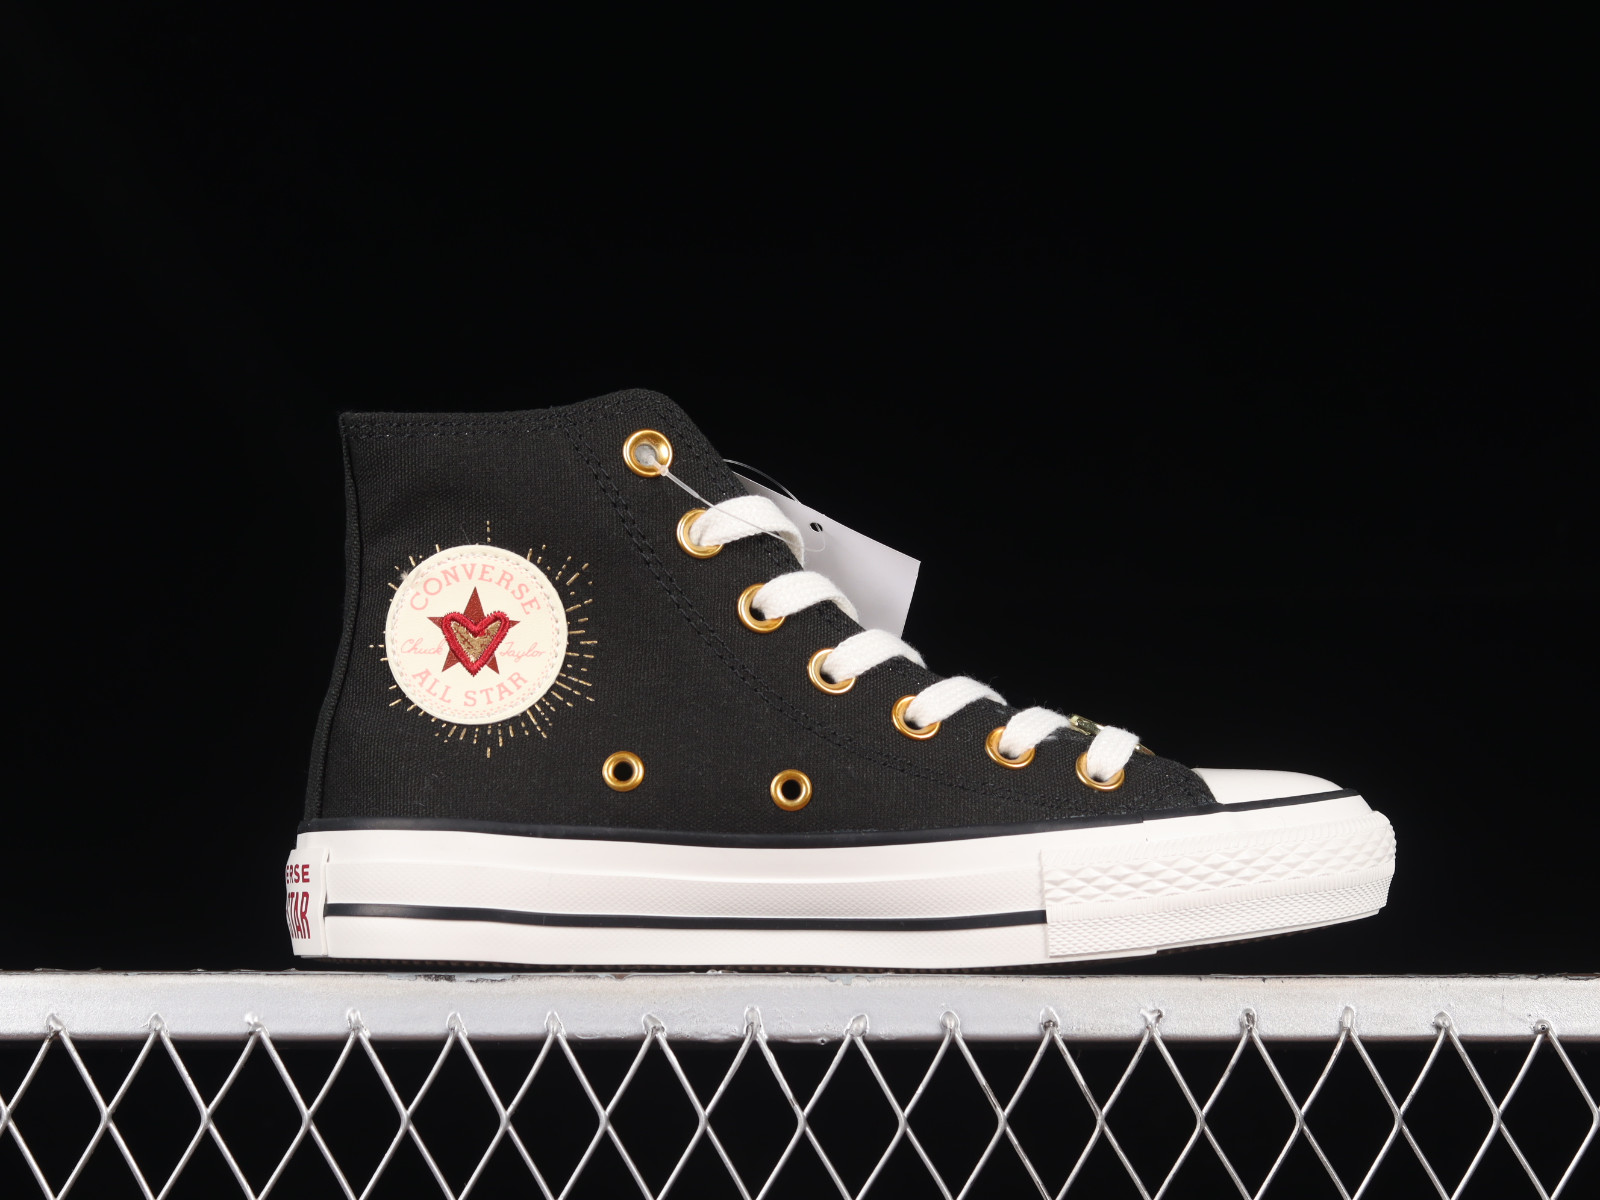 Converse Chuck Taylor All Star Black High Top Shoes - Black - 7.5